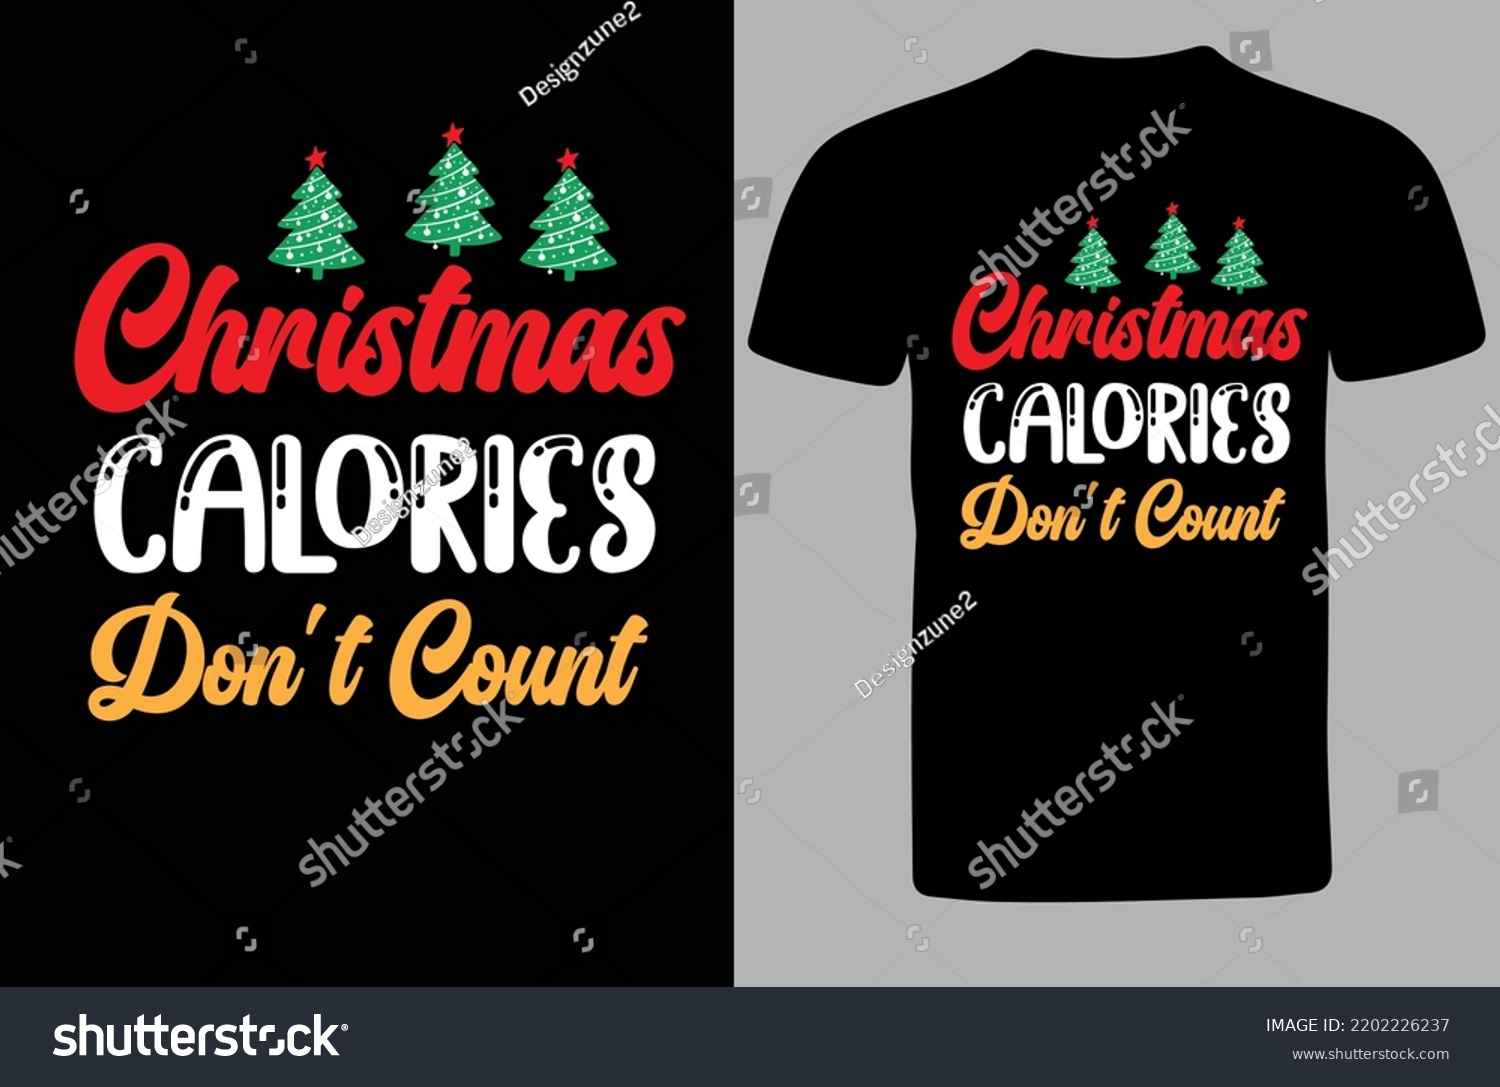 SVG of Christmas Calories Don't Count svg design svg